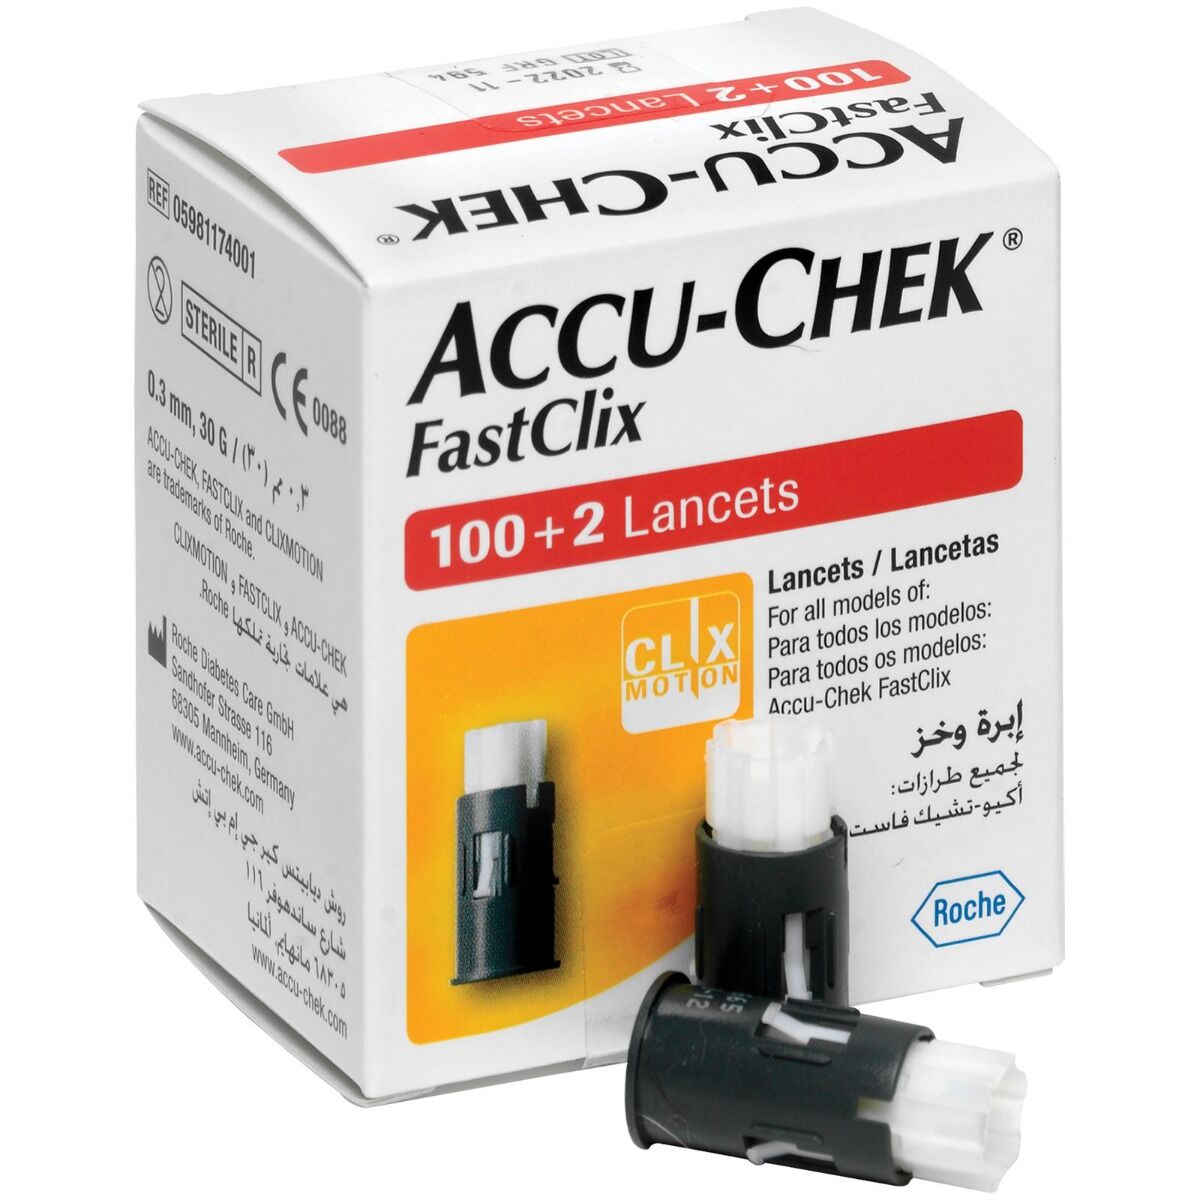 ACCU-CHEK FASTCLIX 100+2 Lancette